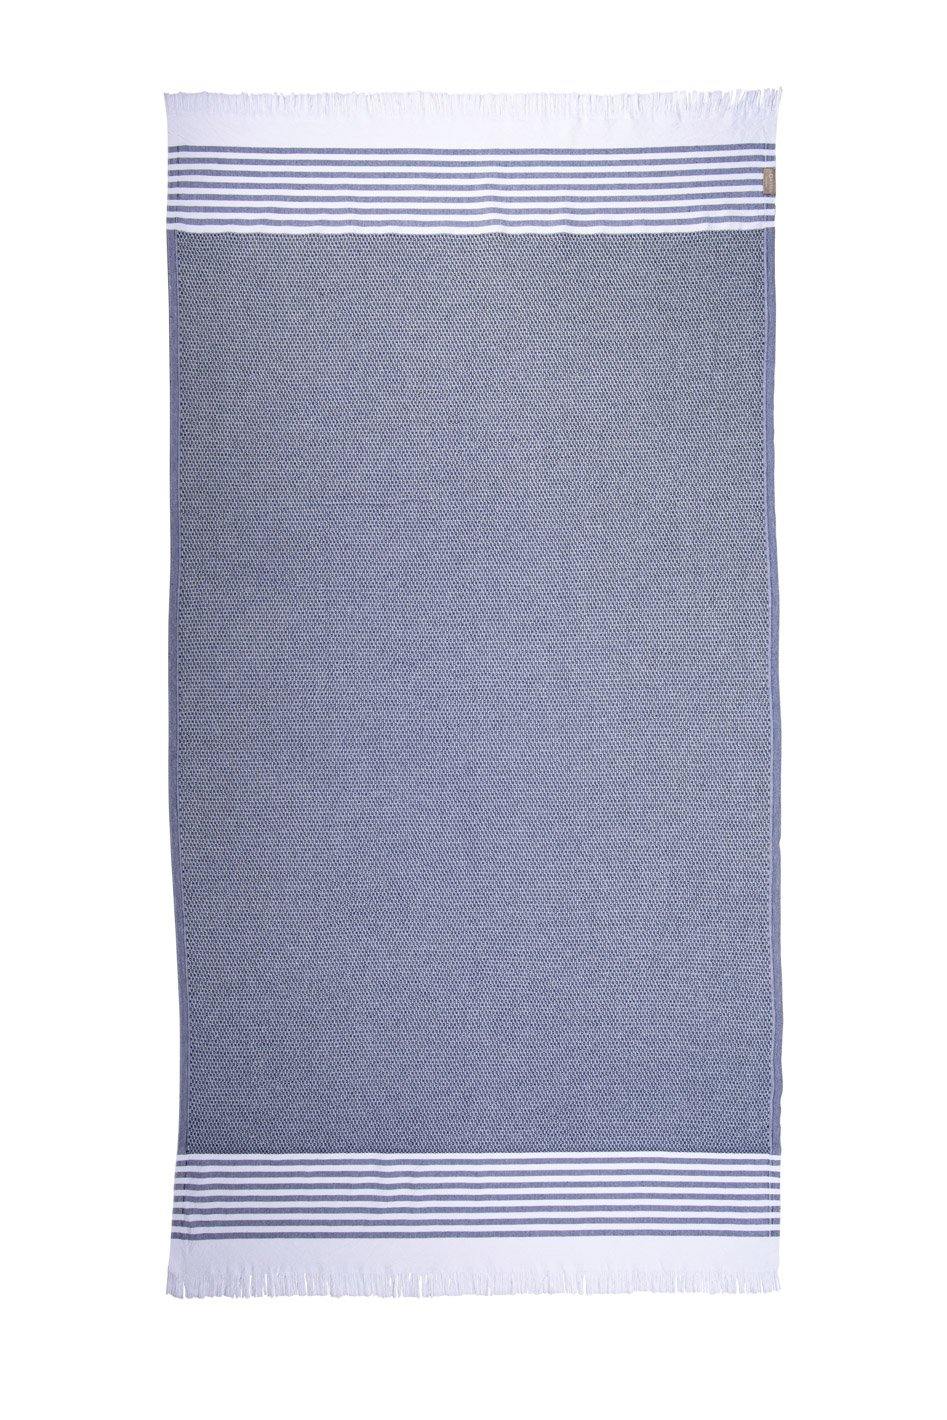 Coast - Blue and White Striped Towel Full Design 